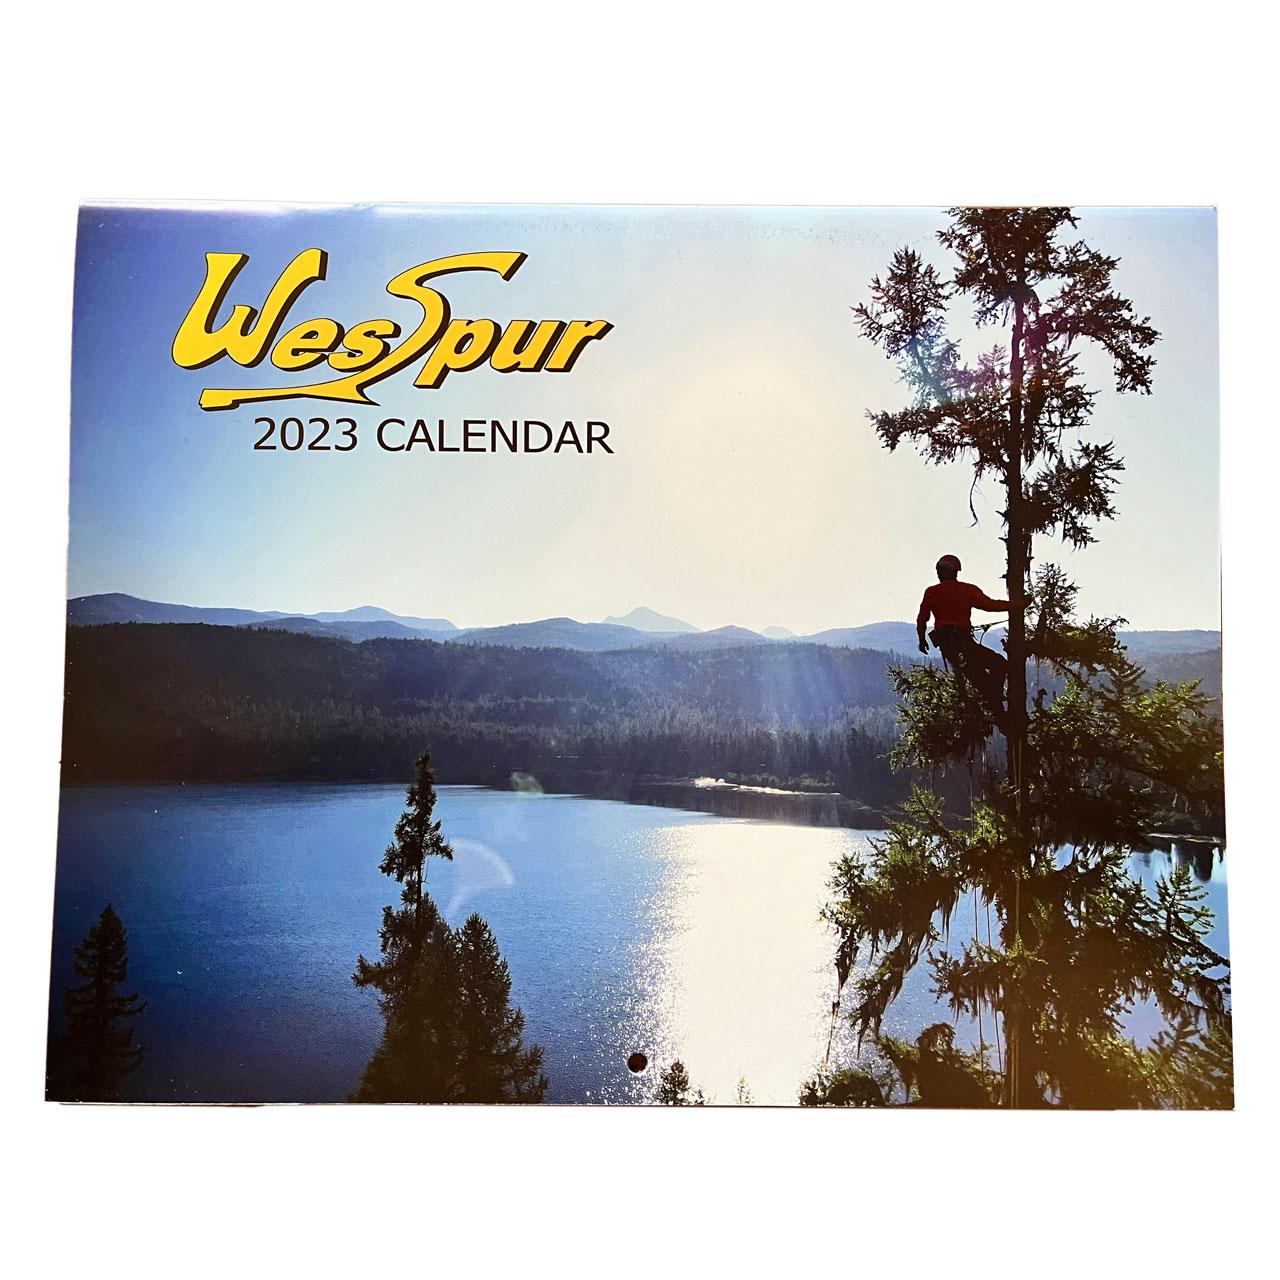 wesspur 2023 calendar